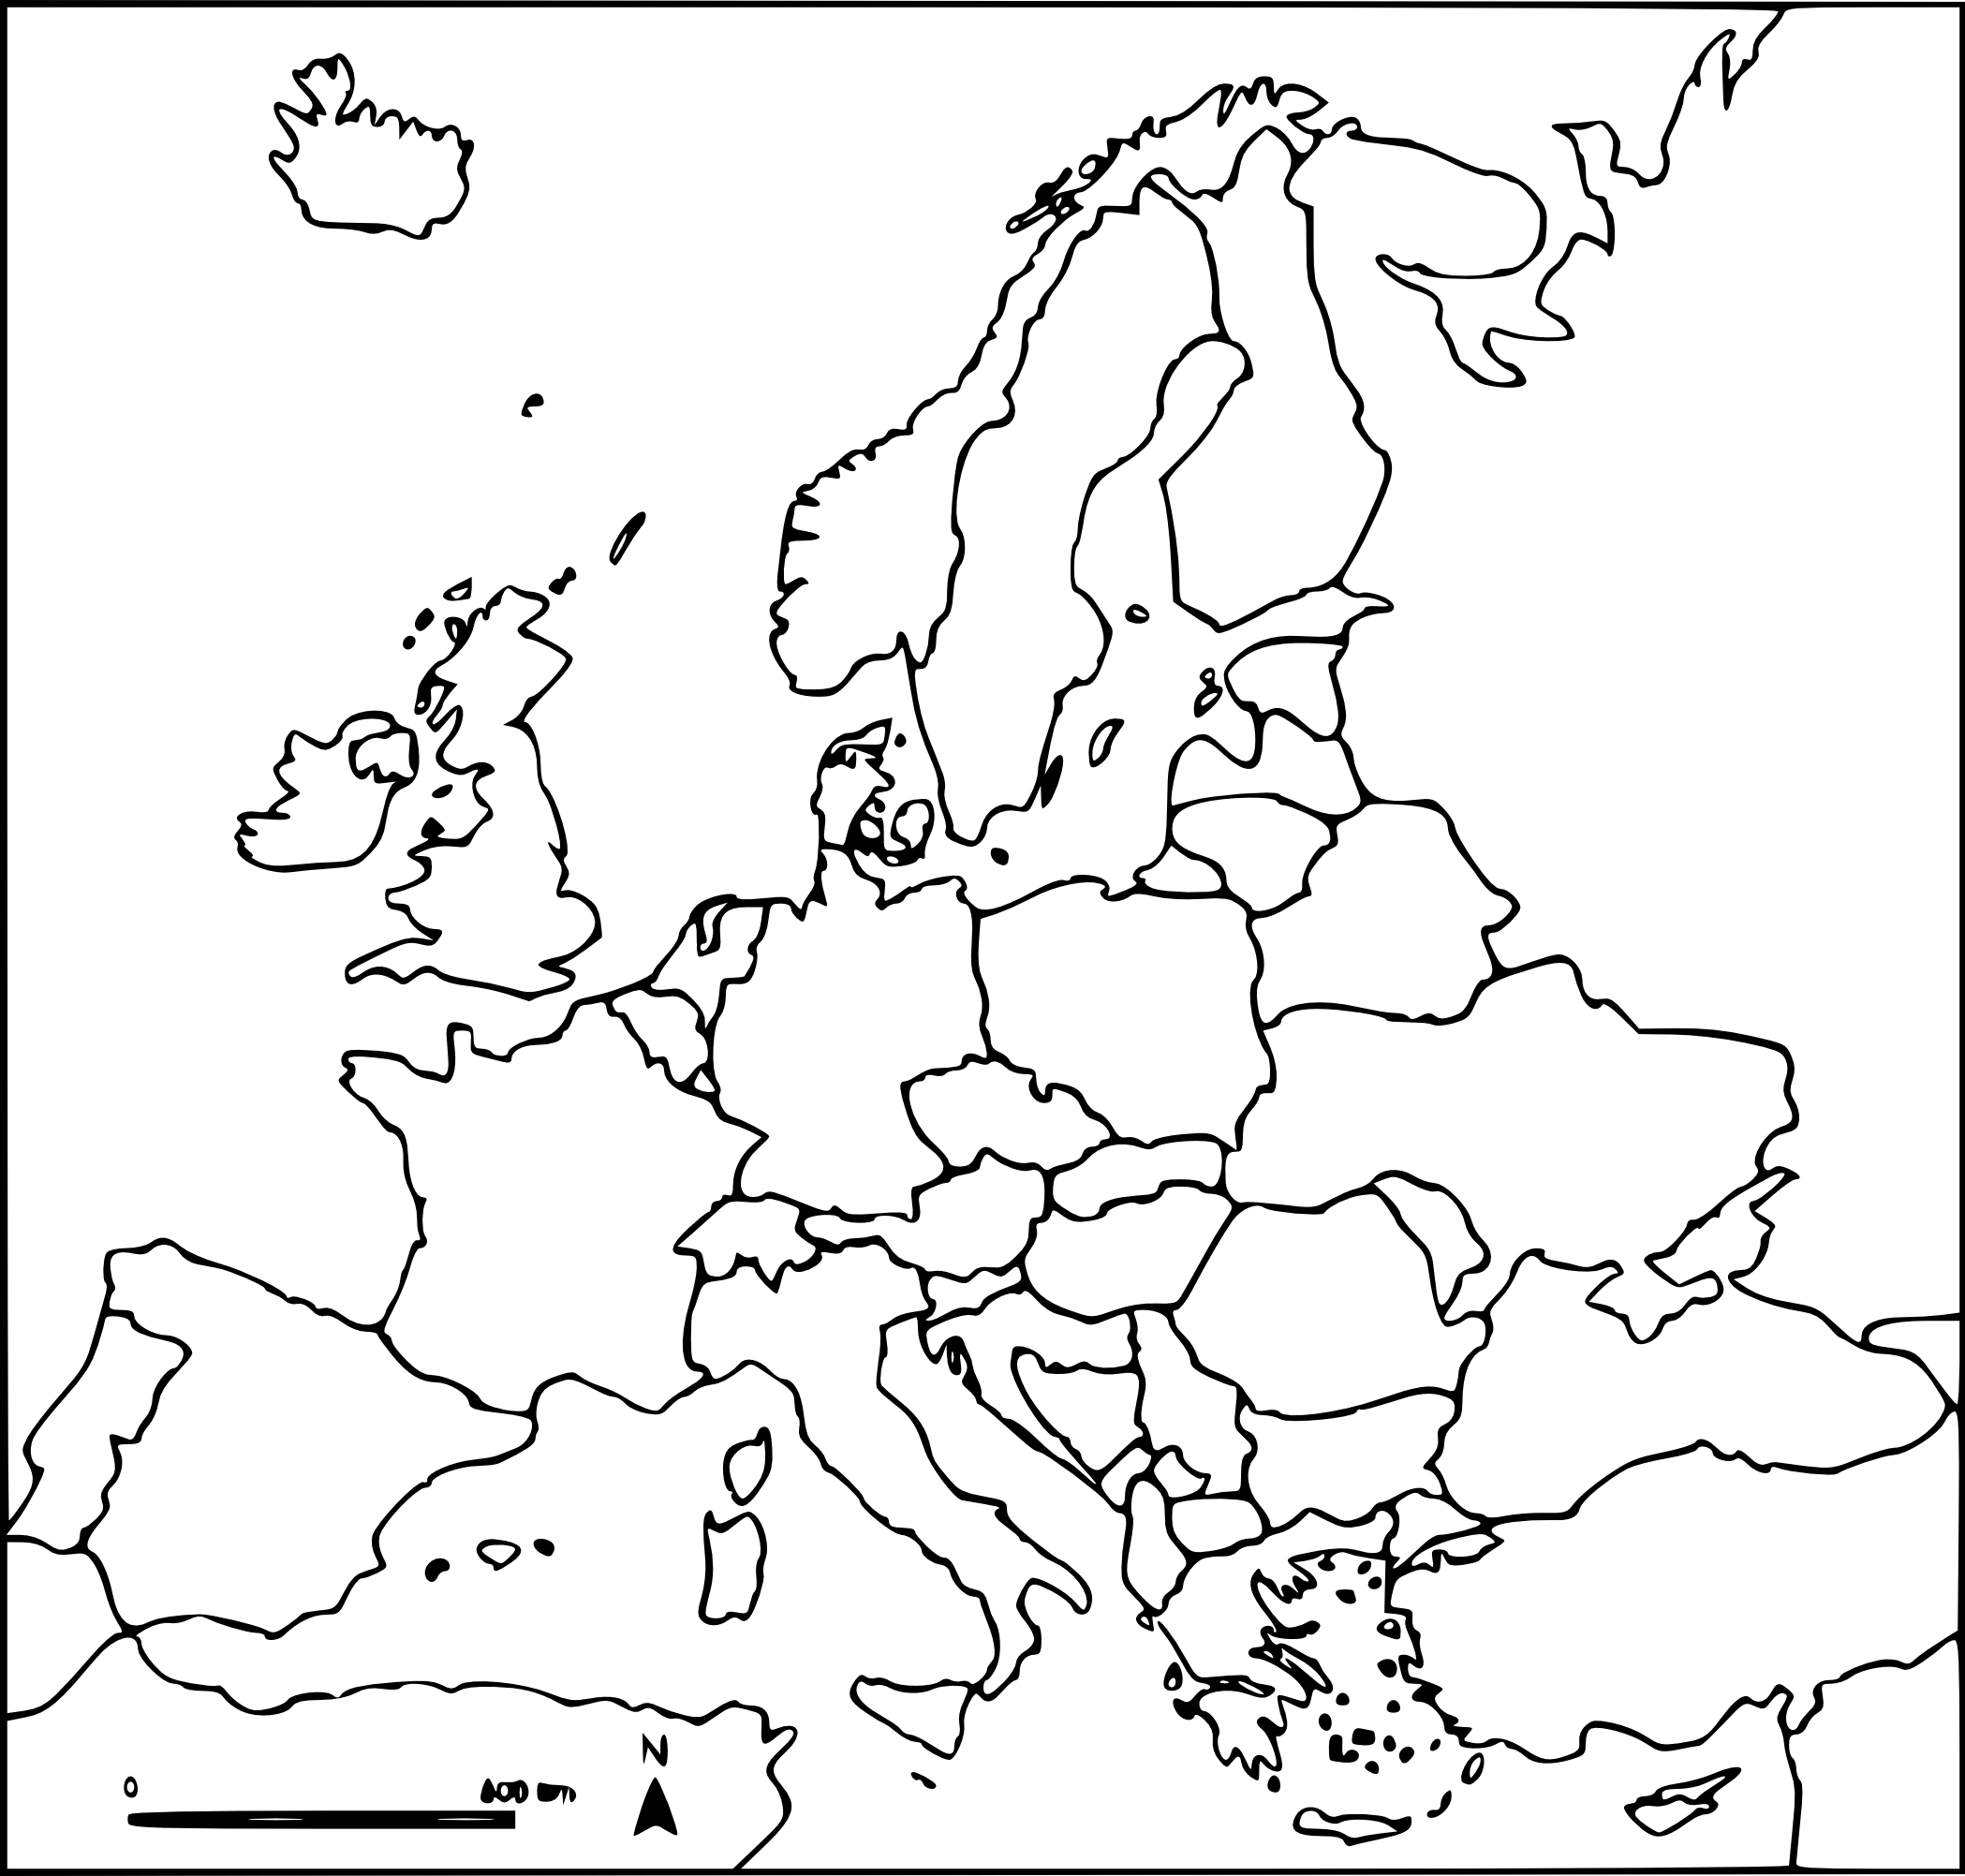 Carte Européenne Vierge Imprimer | My Blog encequiconcerne Carte Vierge De L Union Européenne